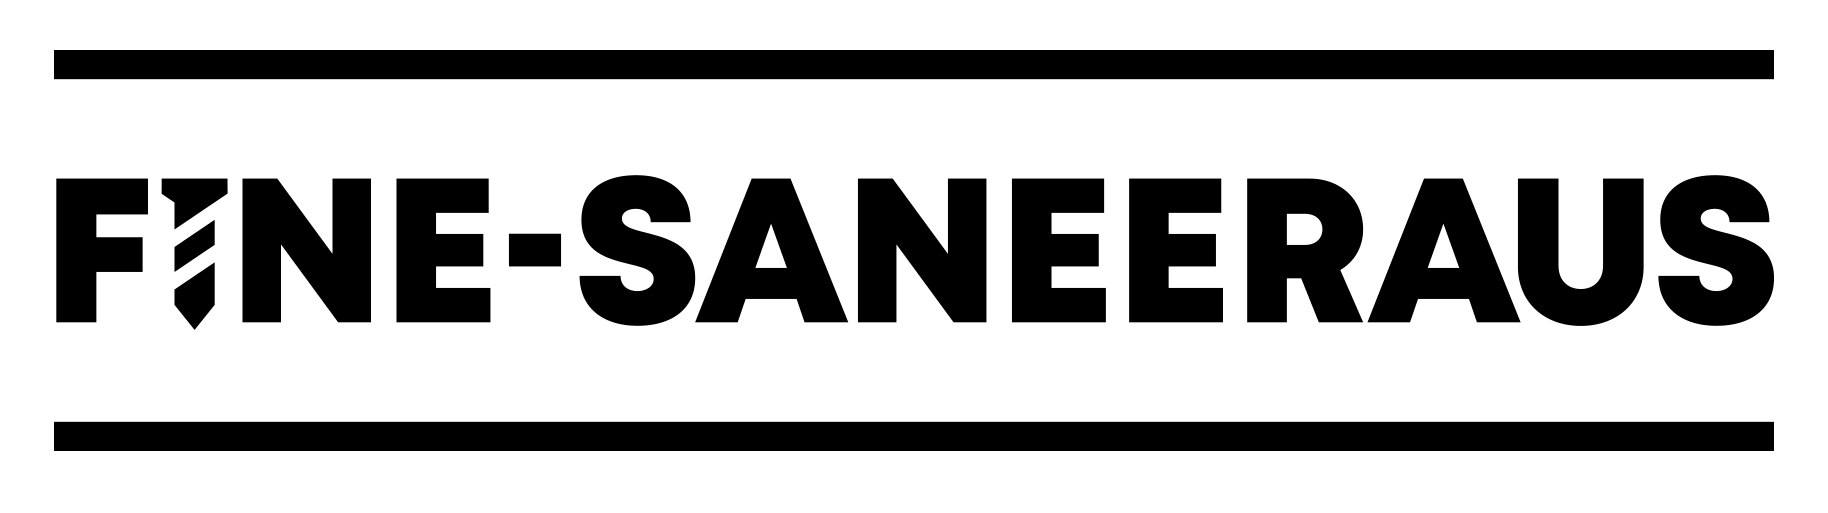 Finesaneeraus Logo